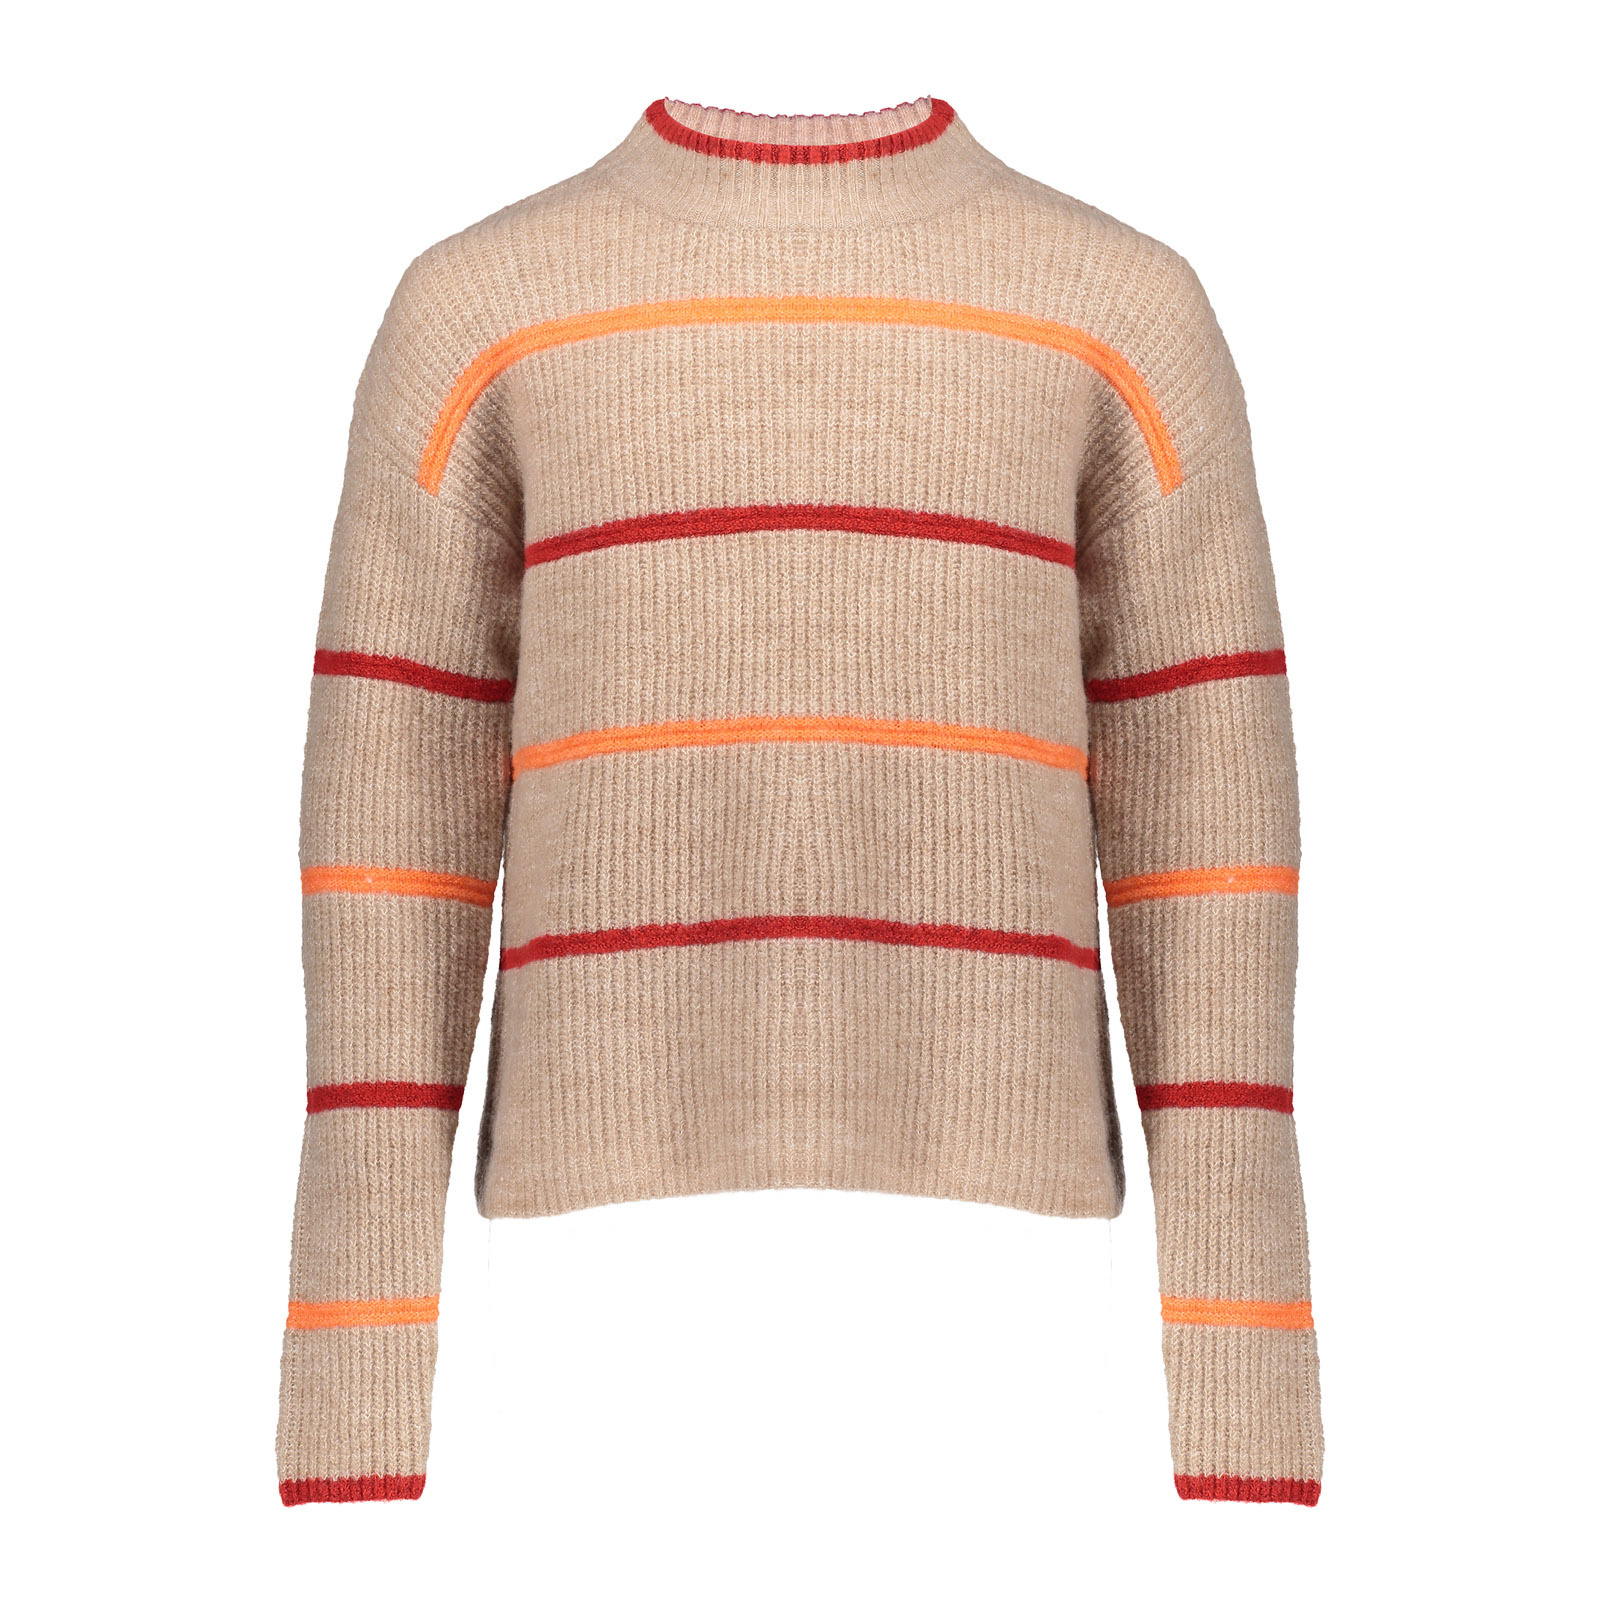 GEISHA - Sweater - Sand/Orange/Red - Maat 152